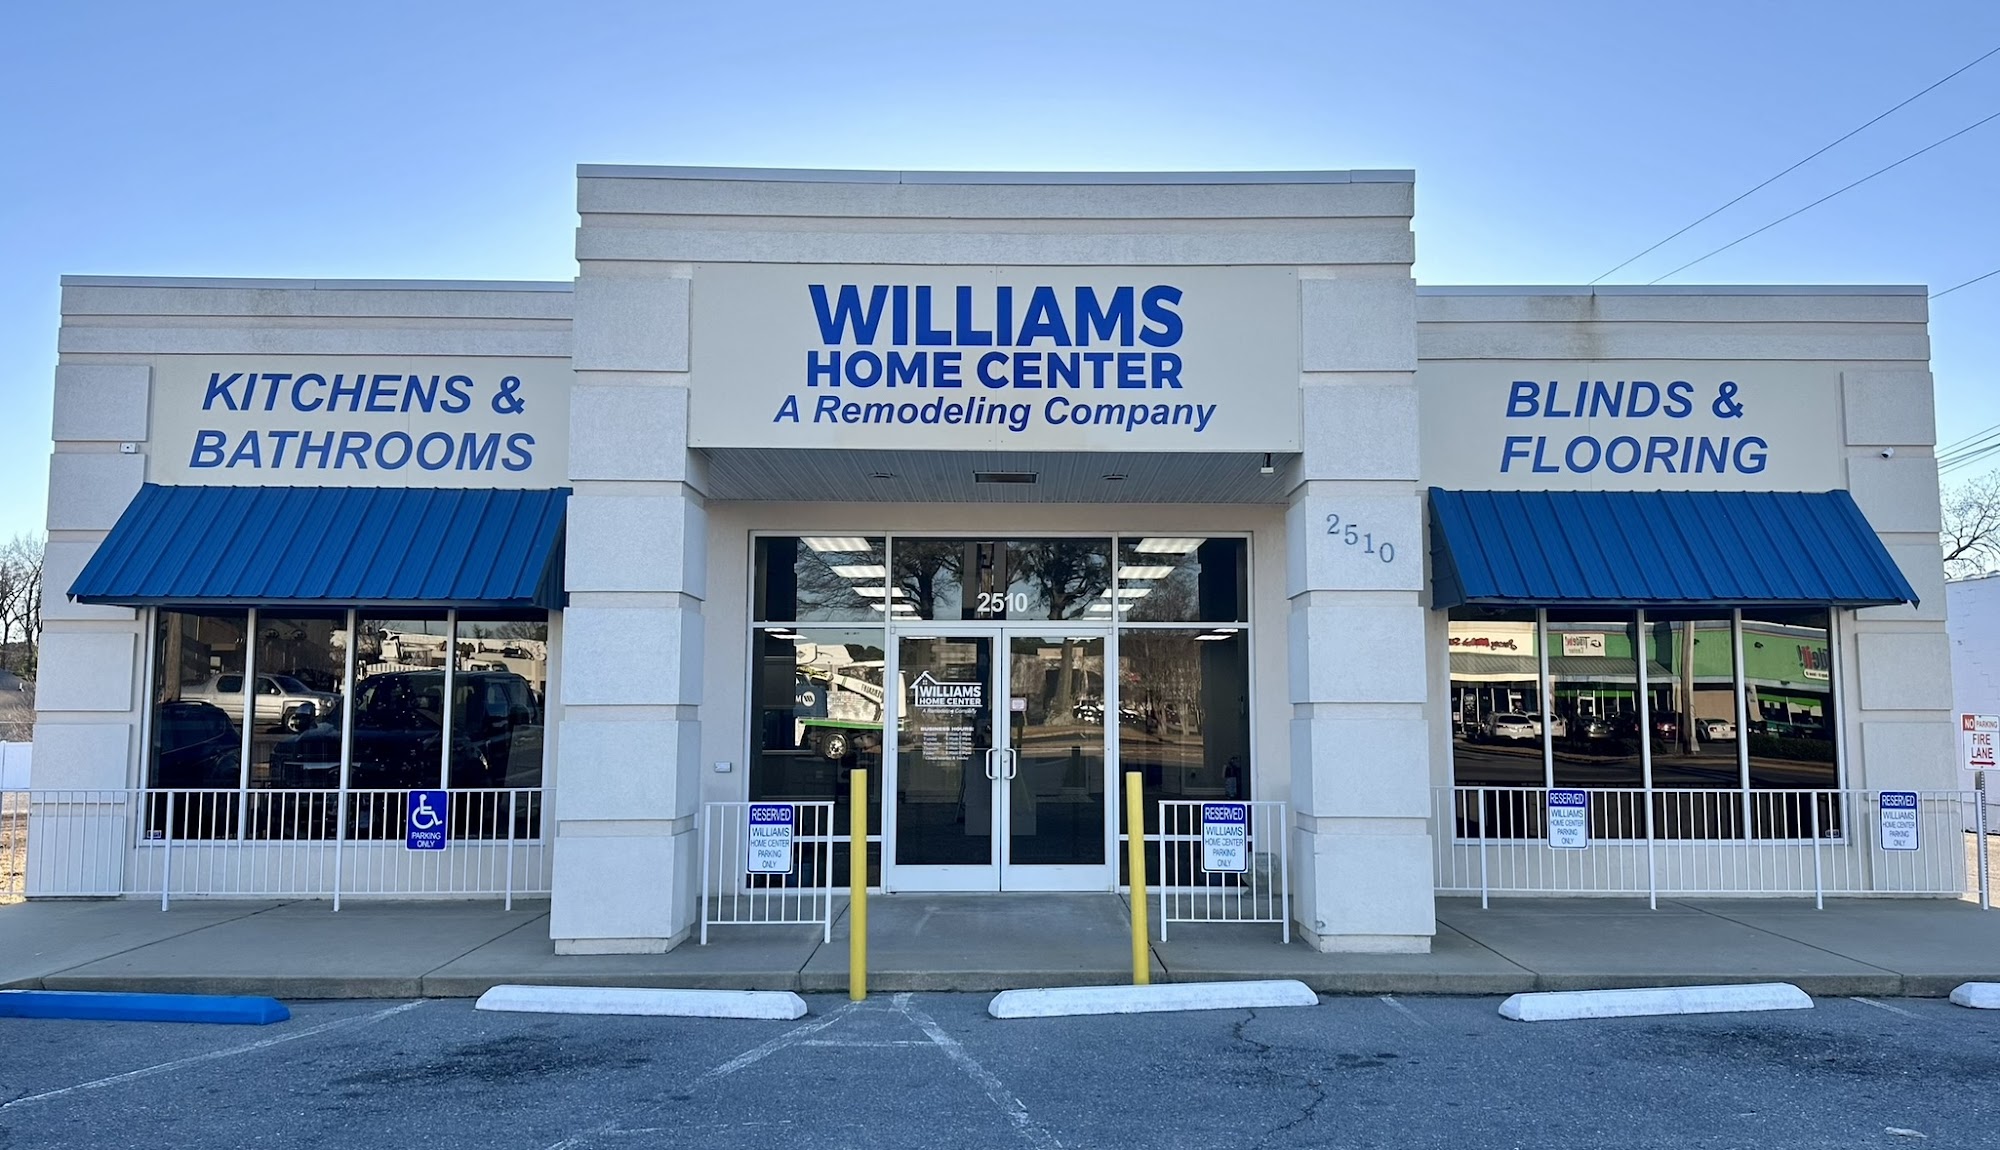 Williams Home Center